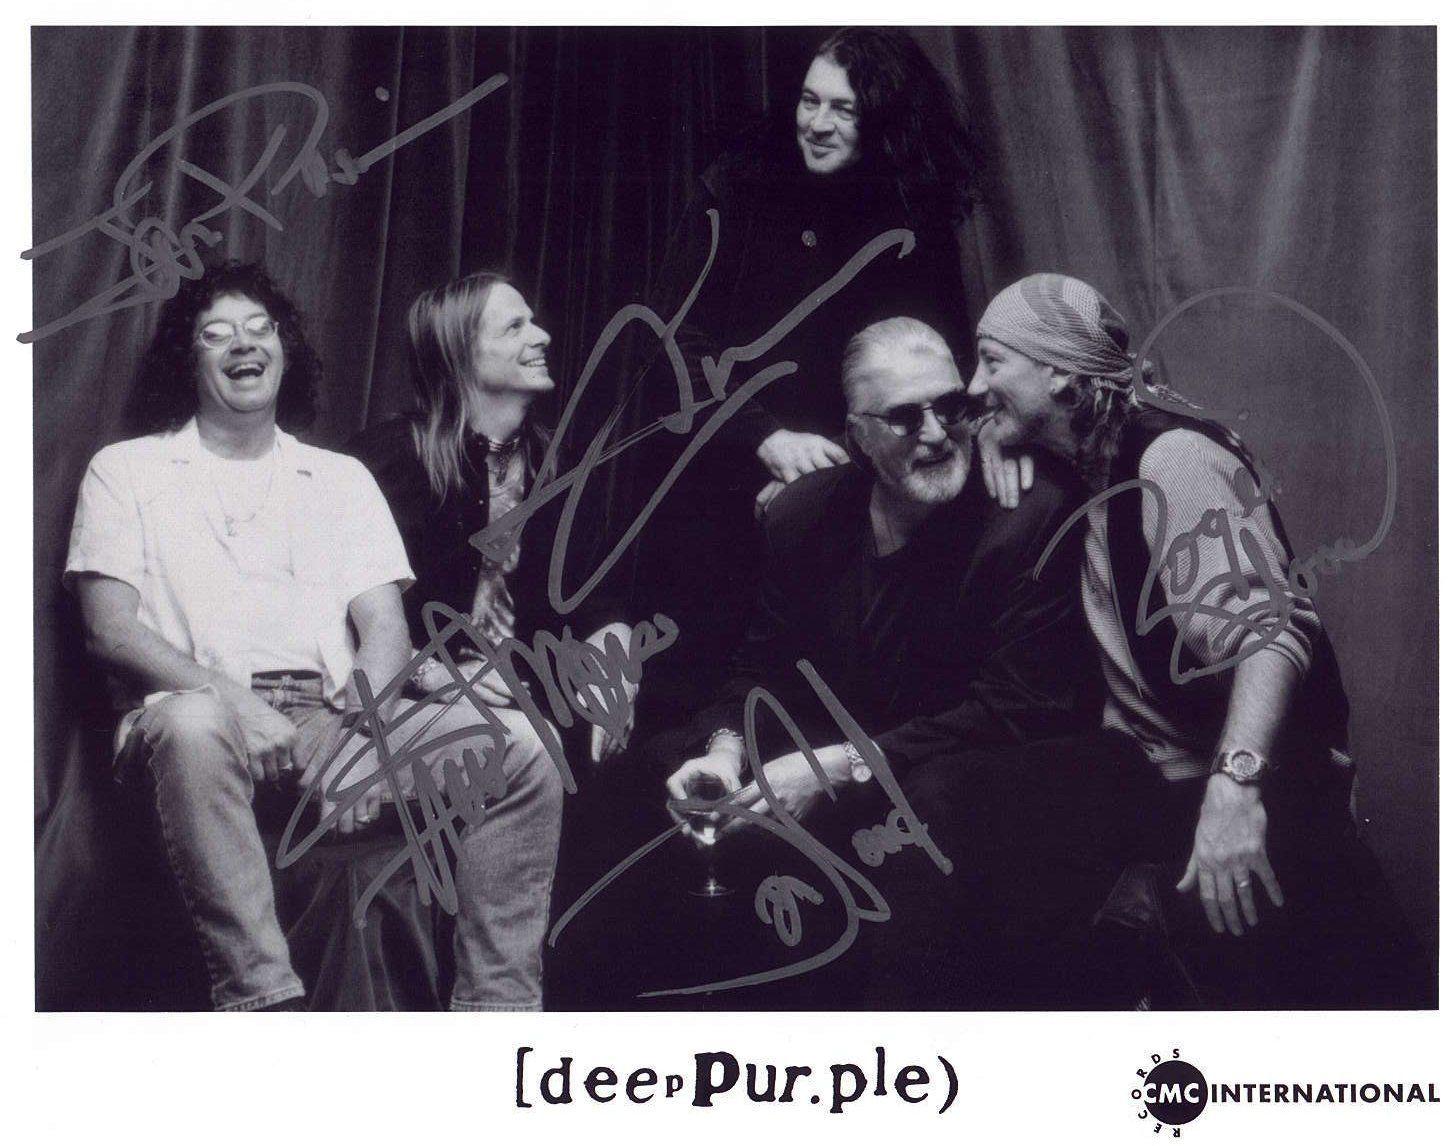 Deep Purple Wallpaper, Deep Purple Band Wallpaper And Desktop